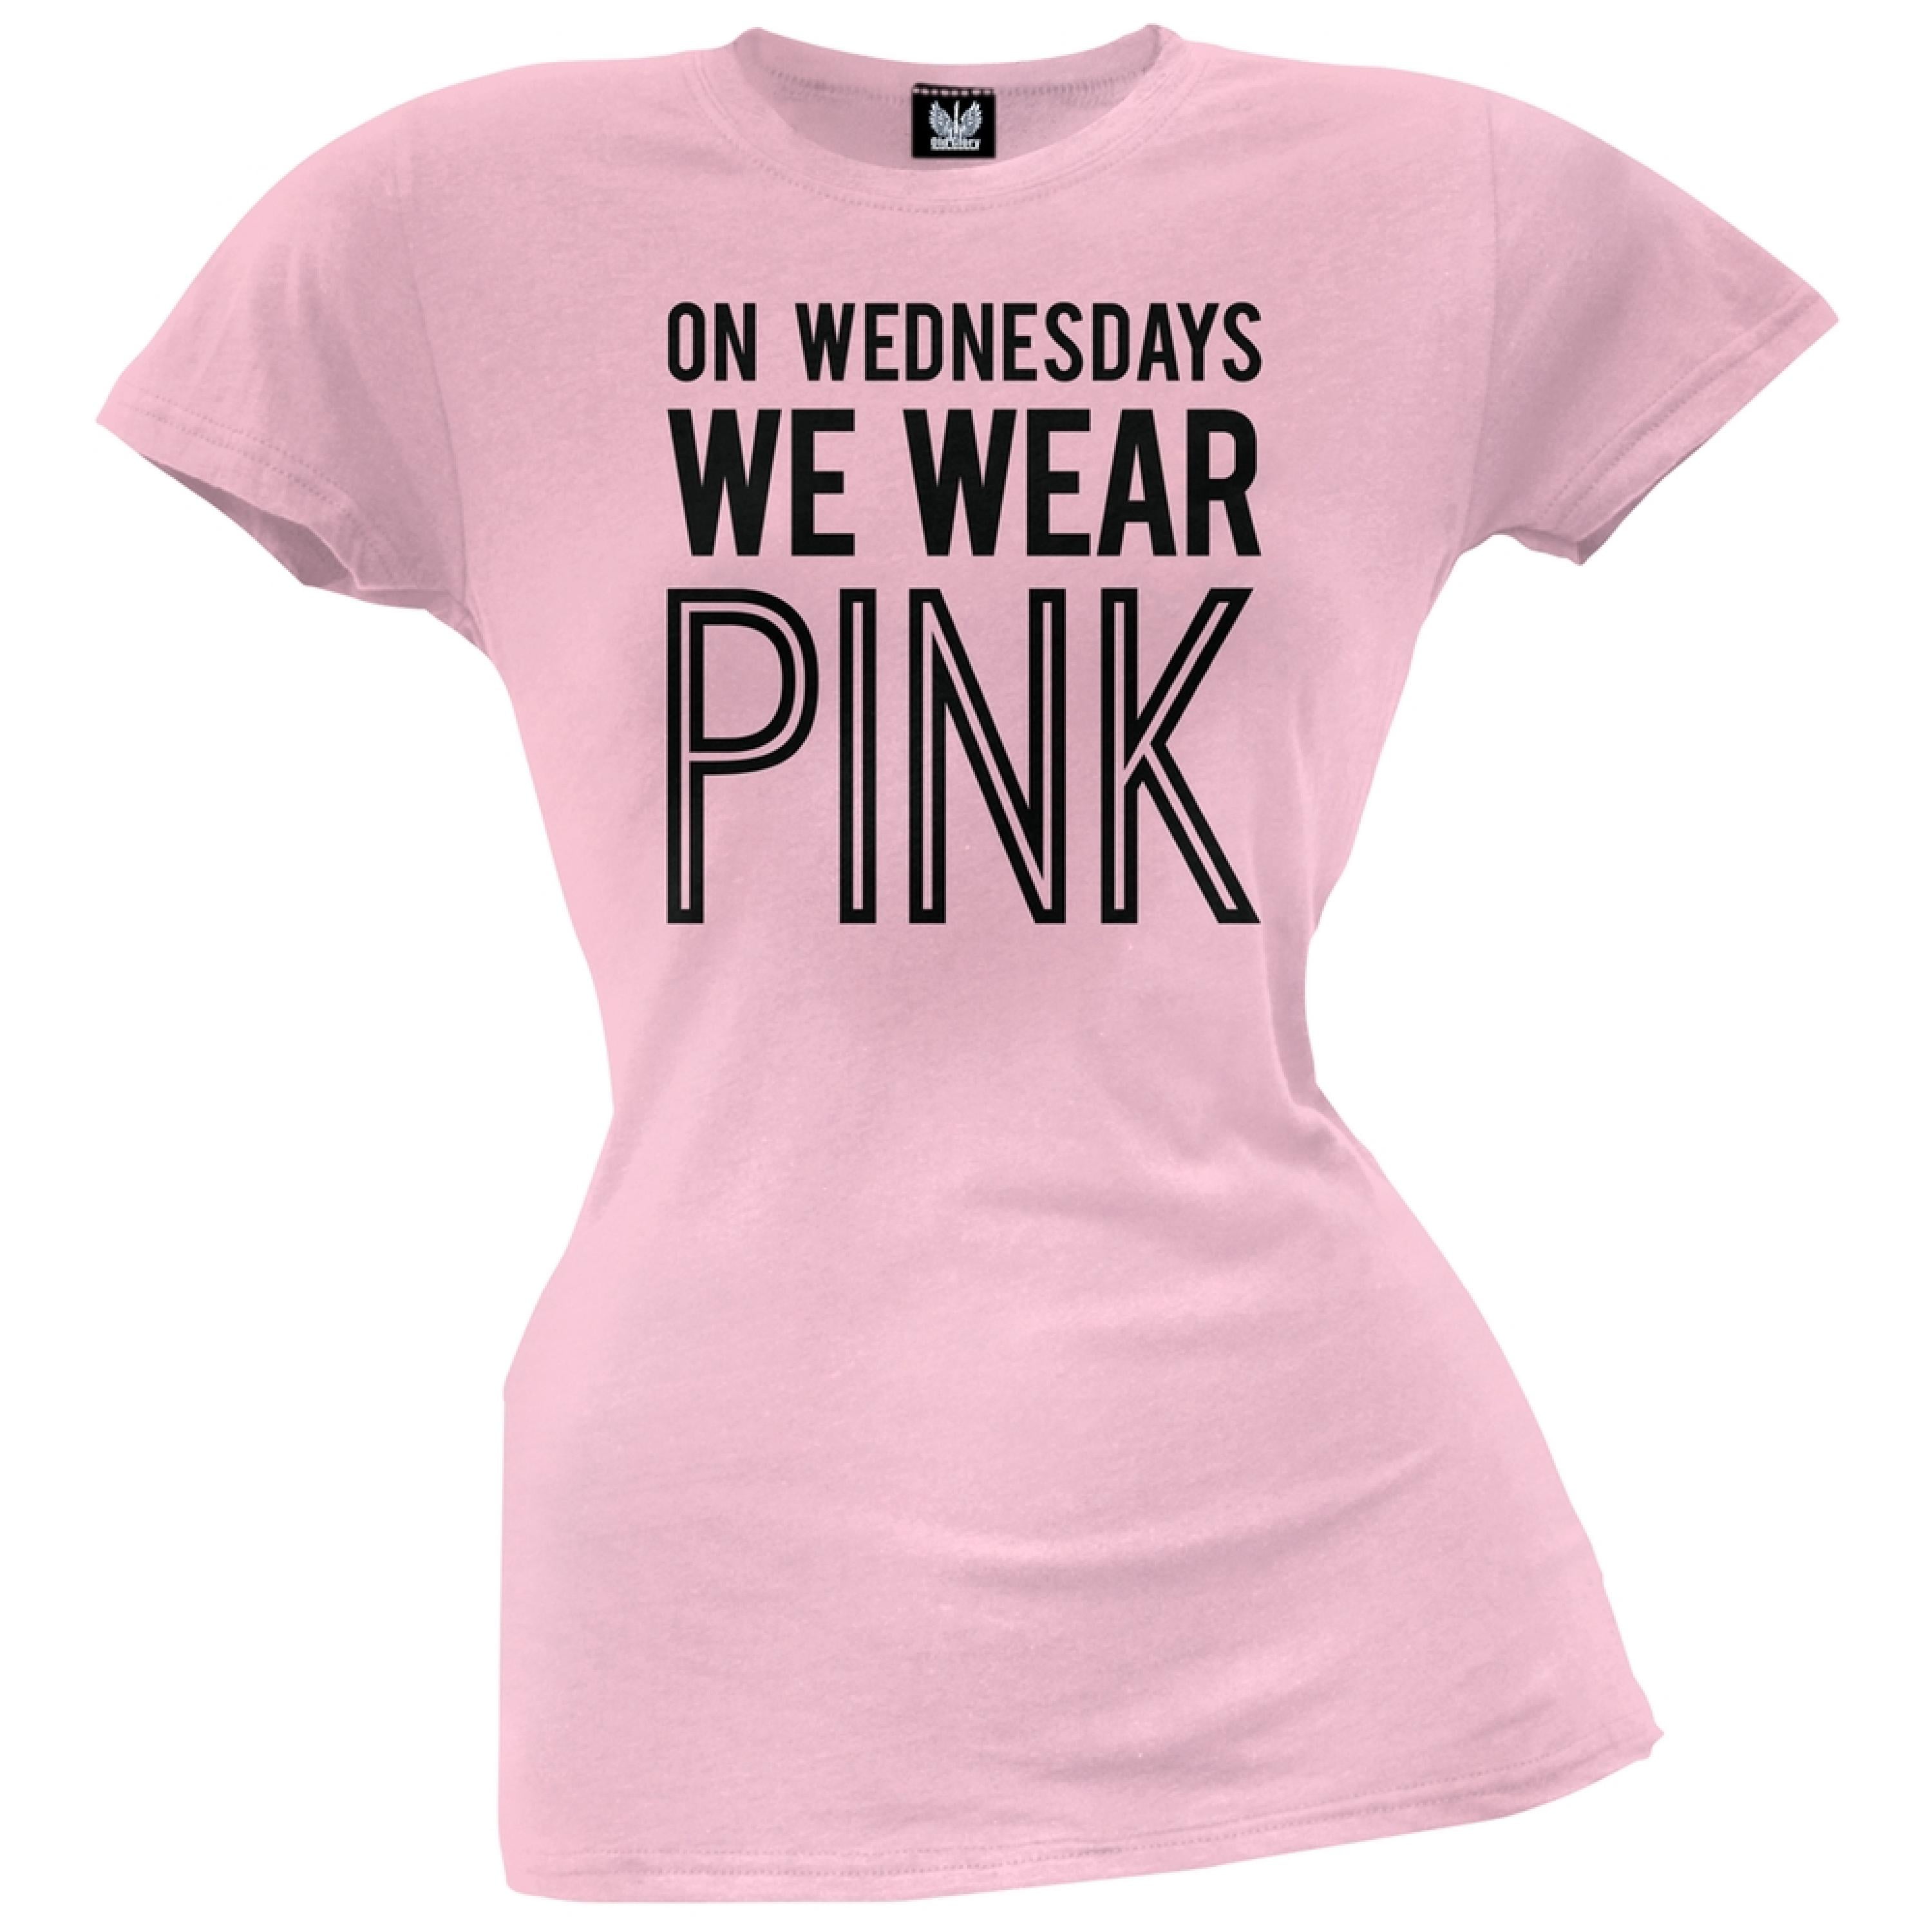 Im wearing перевод. We Wear Pink футболка. On Wednesday we Wear Pink. Одежда Wednesday. Футболка Wednesday женская.